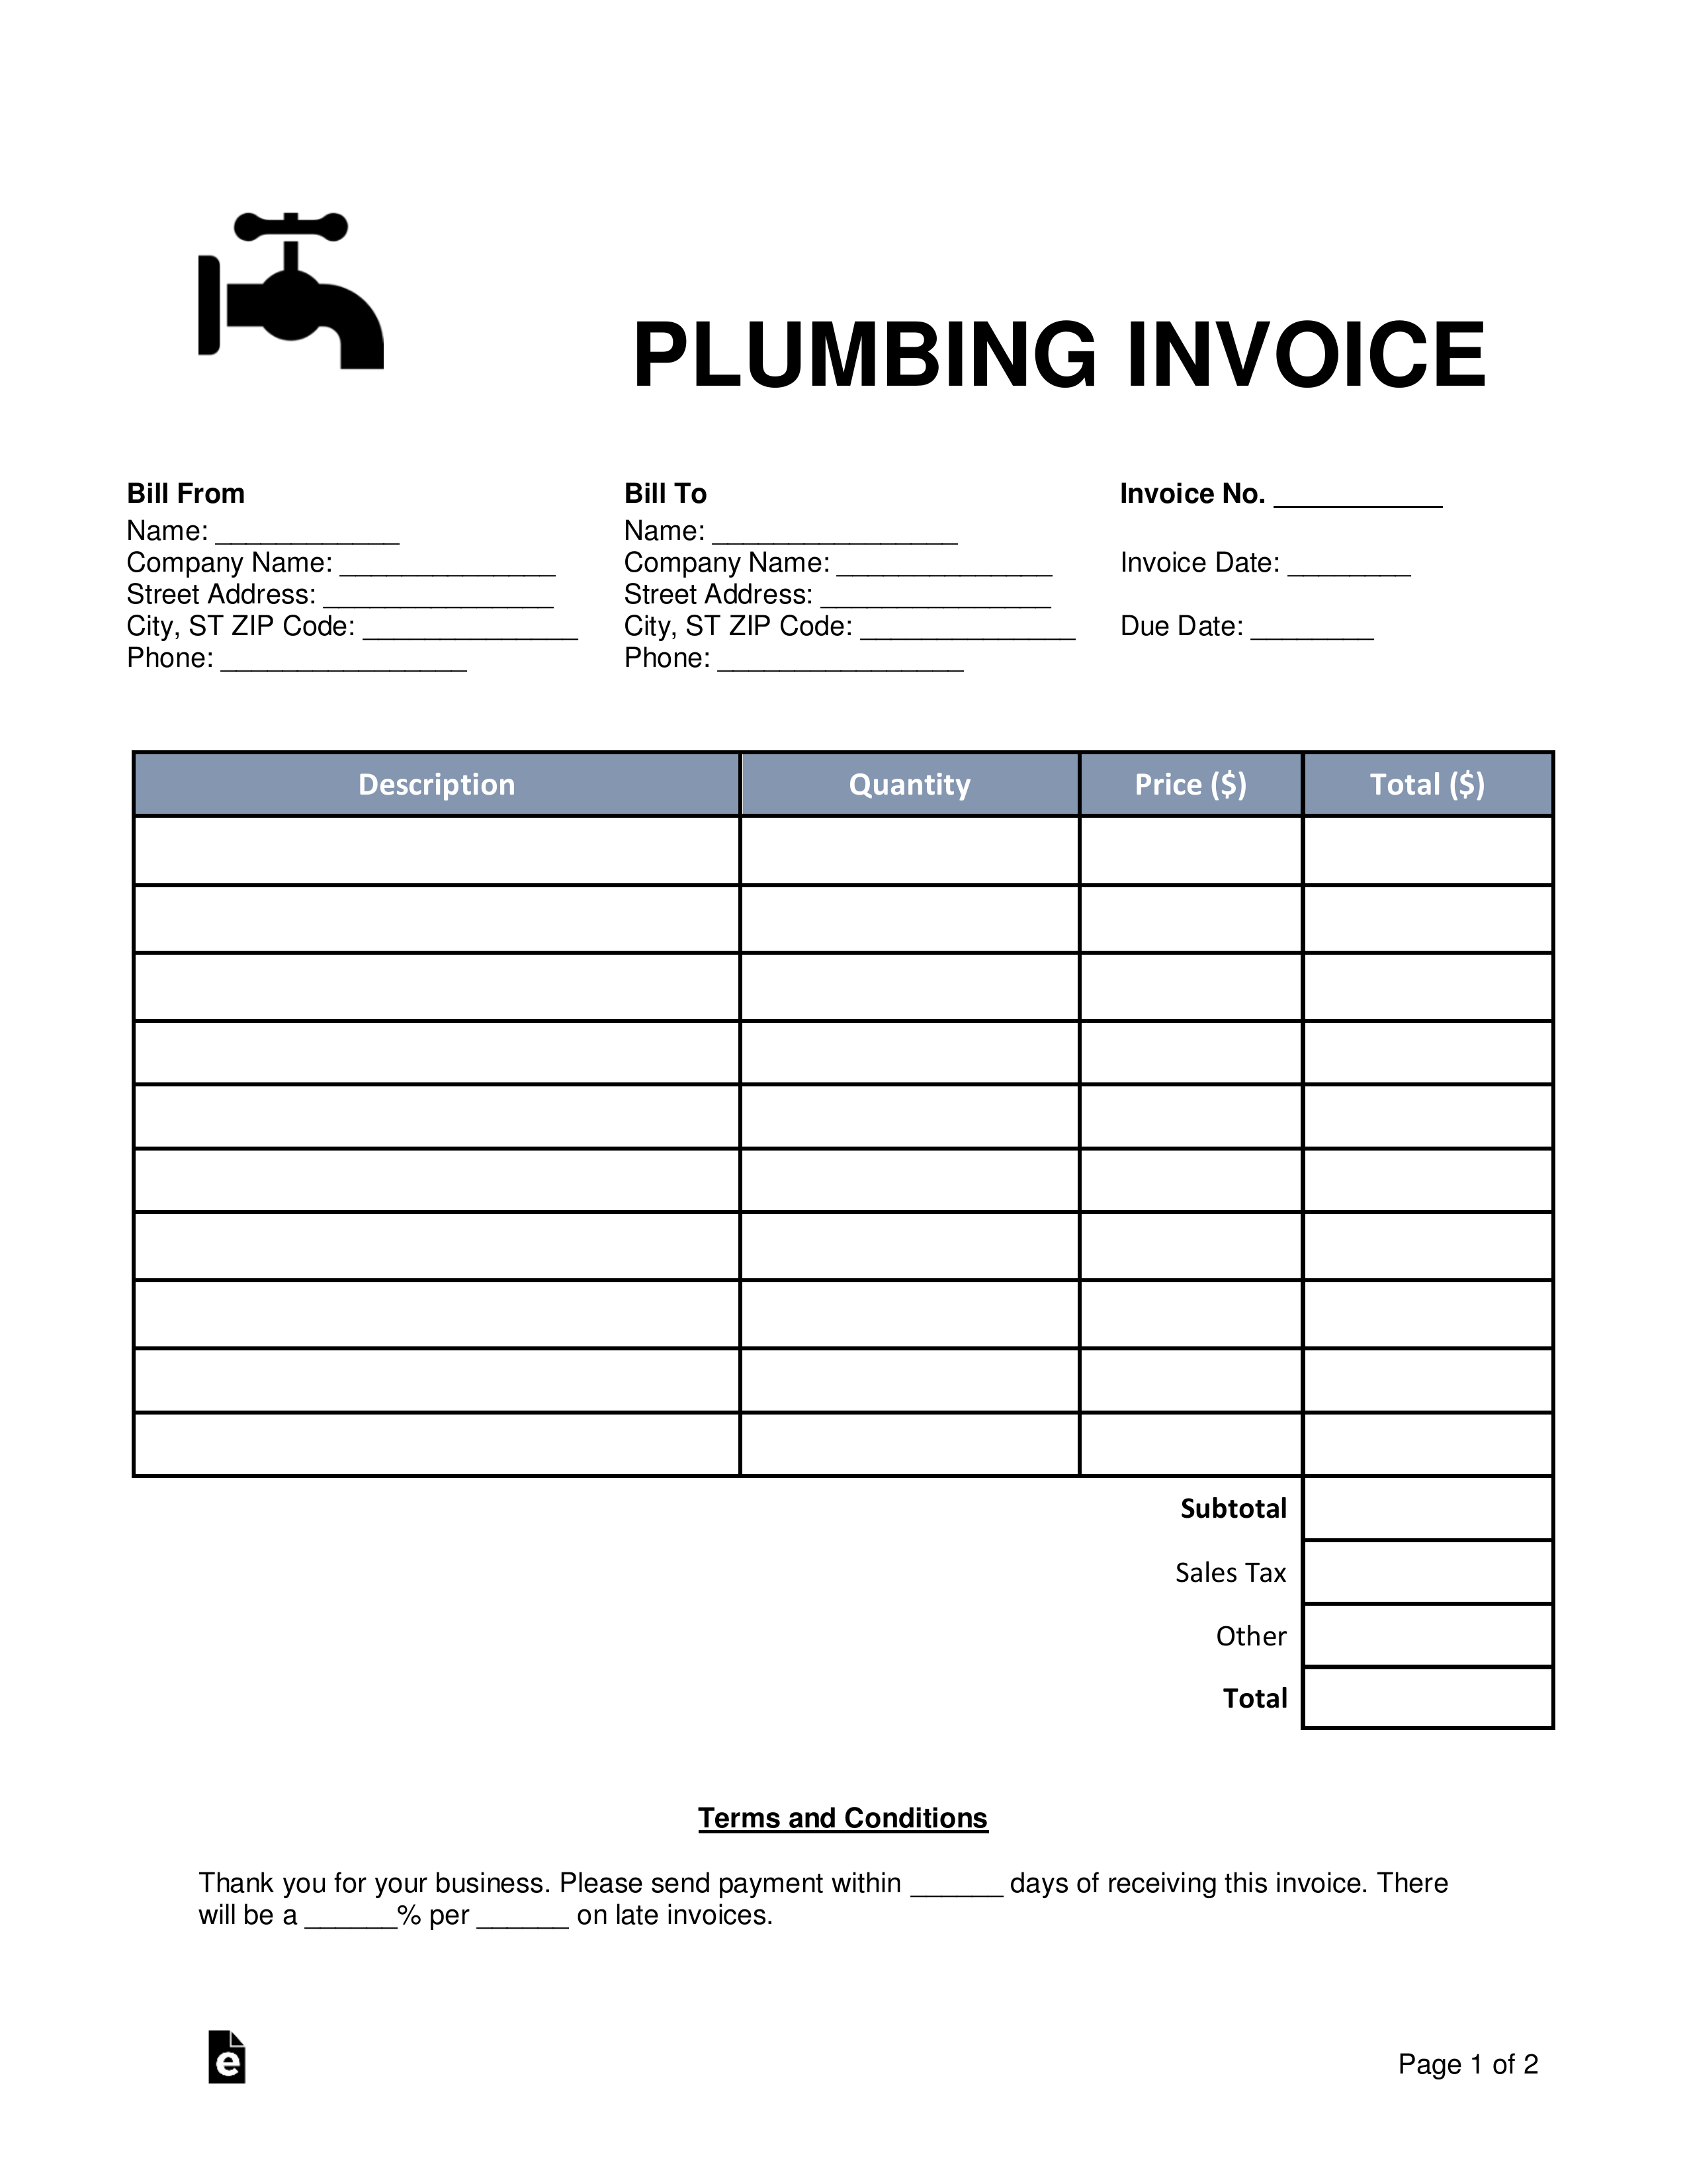 Free Plumbing Invoice Template - Word | PDF – eForms